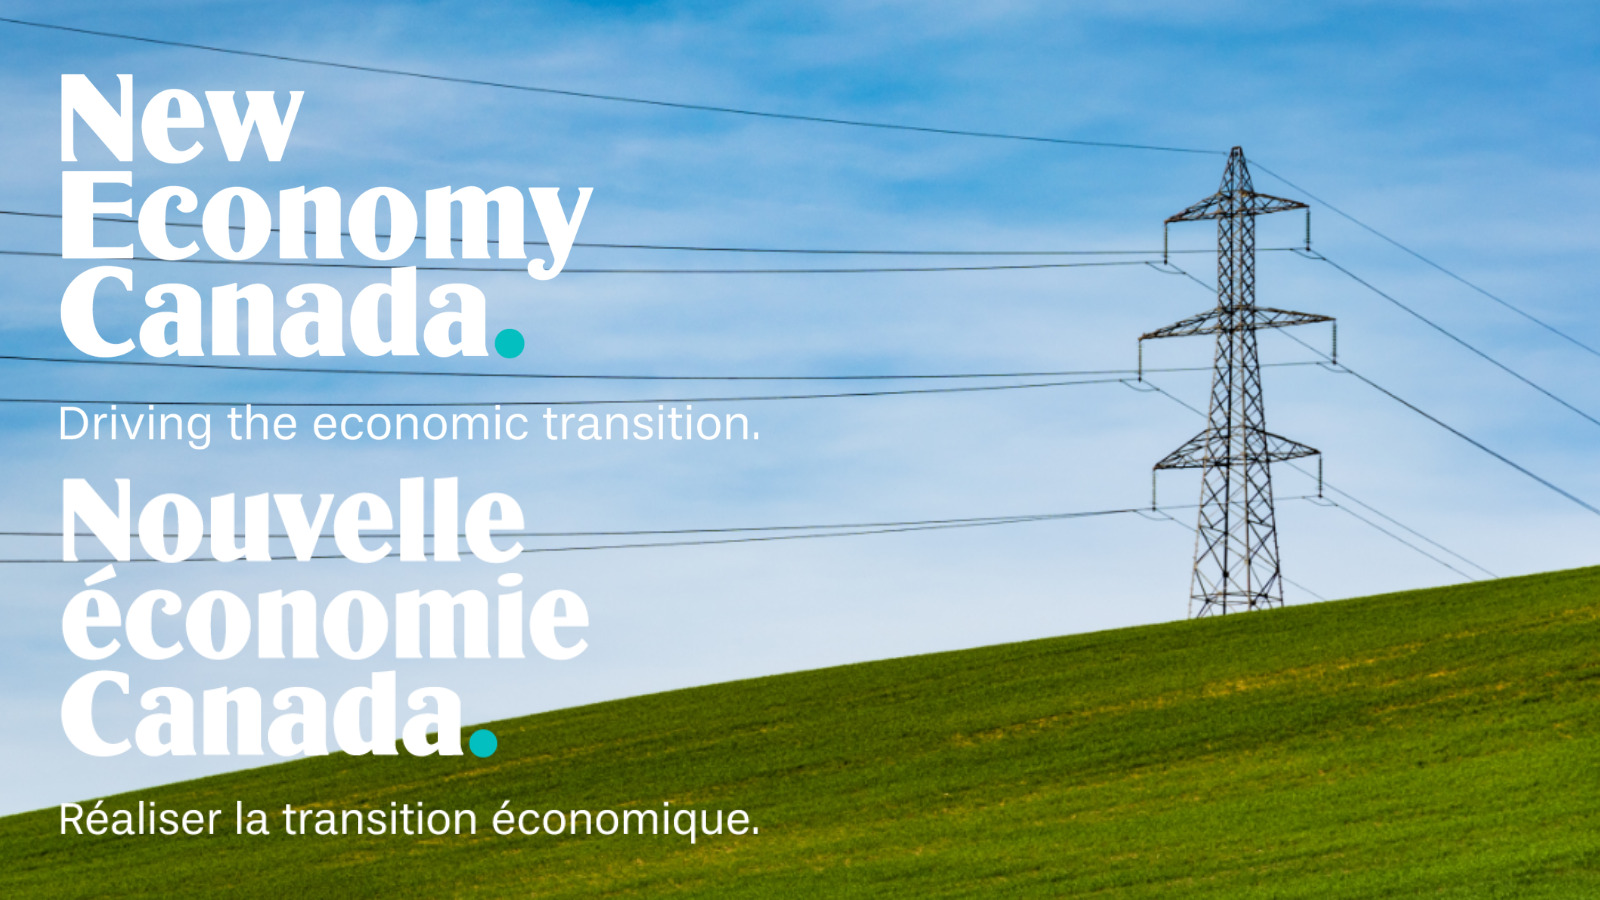 Transmission Lines New Economy Canada 1